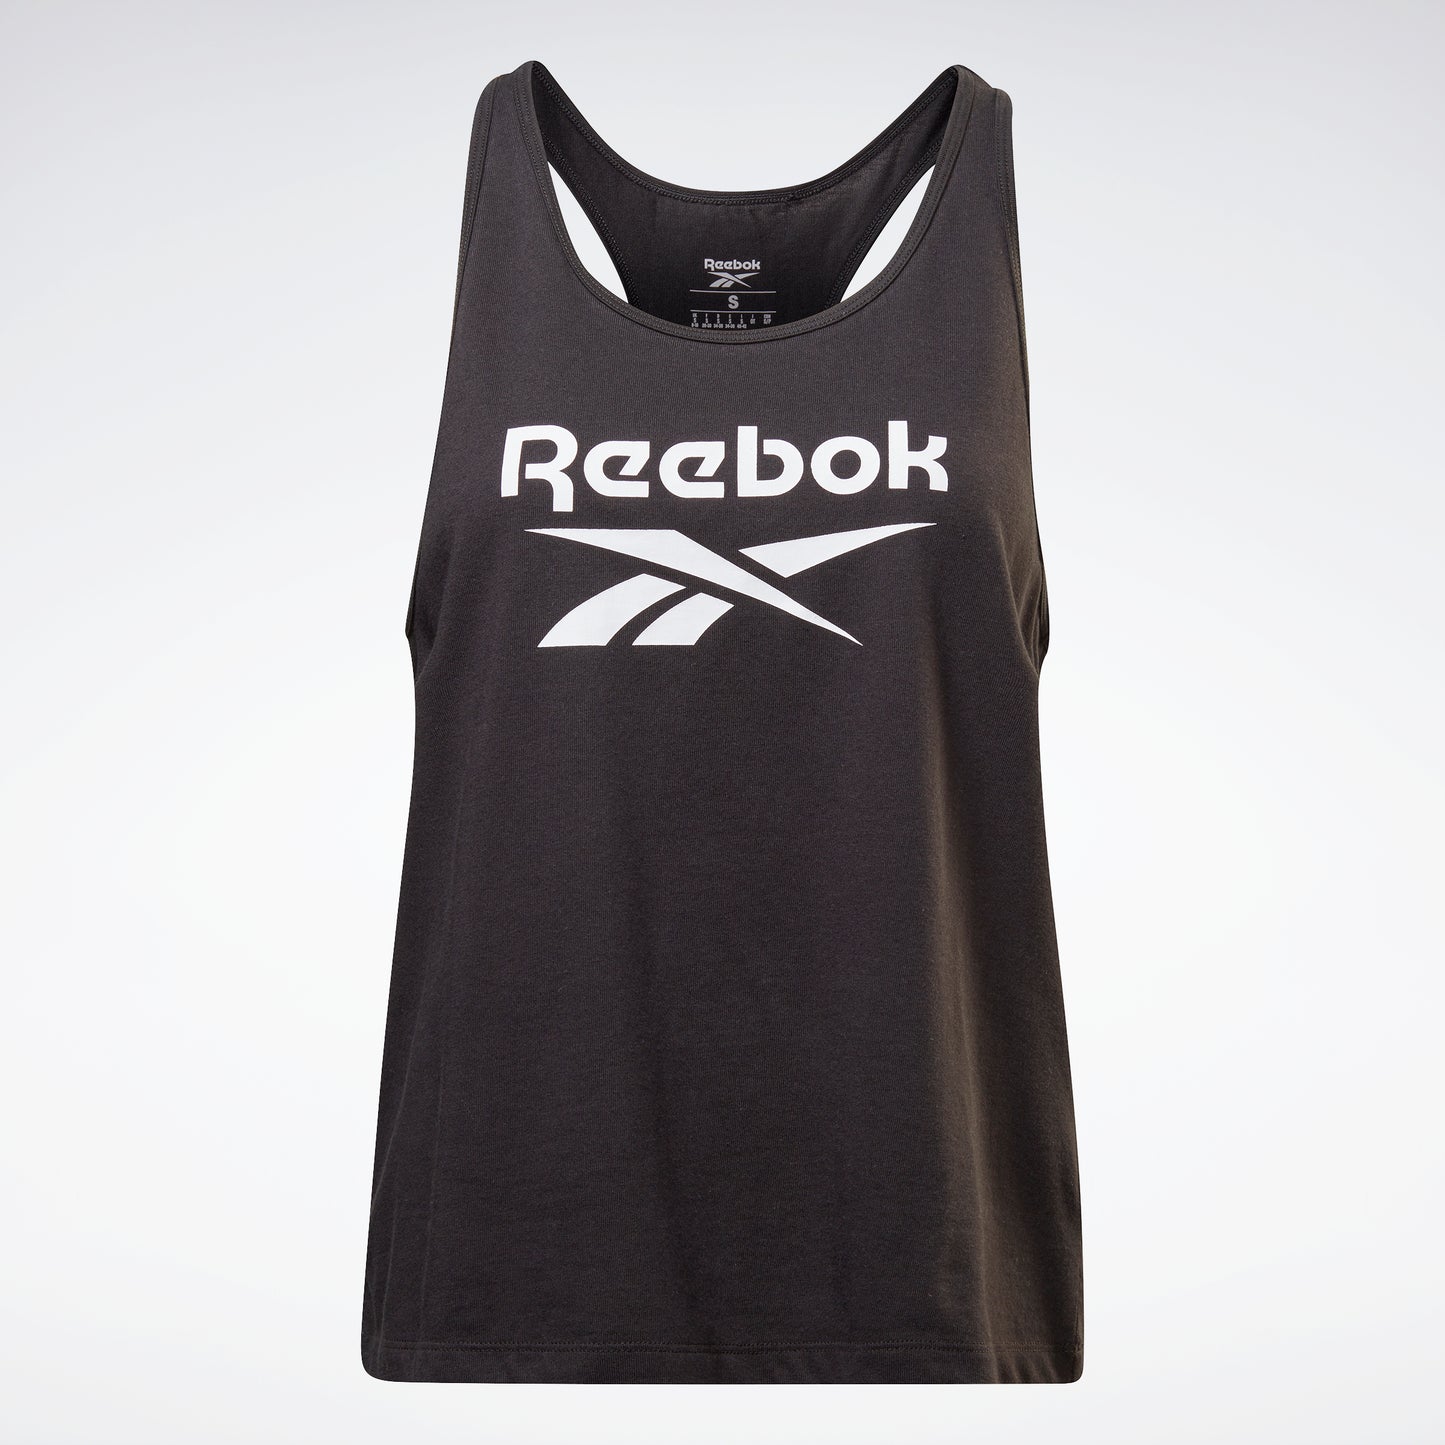 Reebok Shirt Womens Extra Small Black Tank Top Workout Training